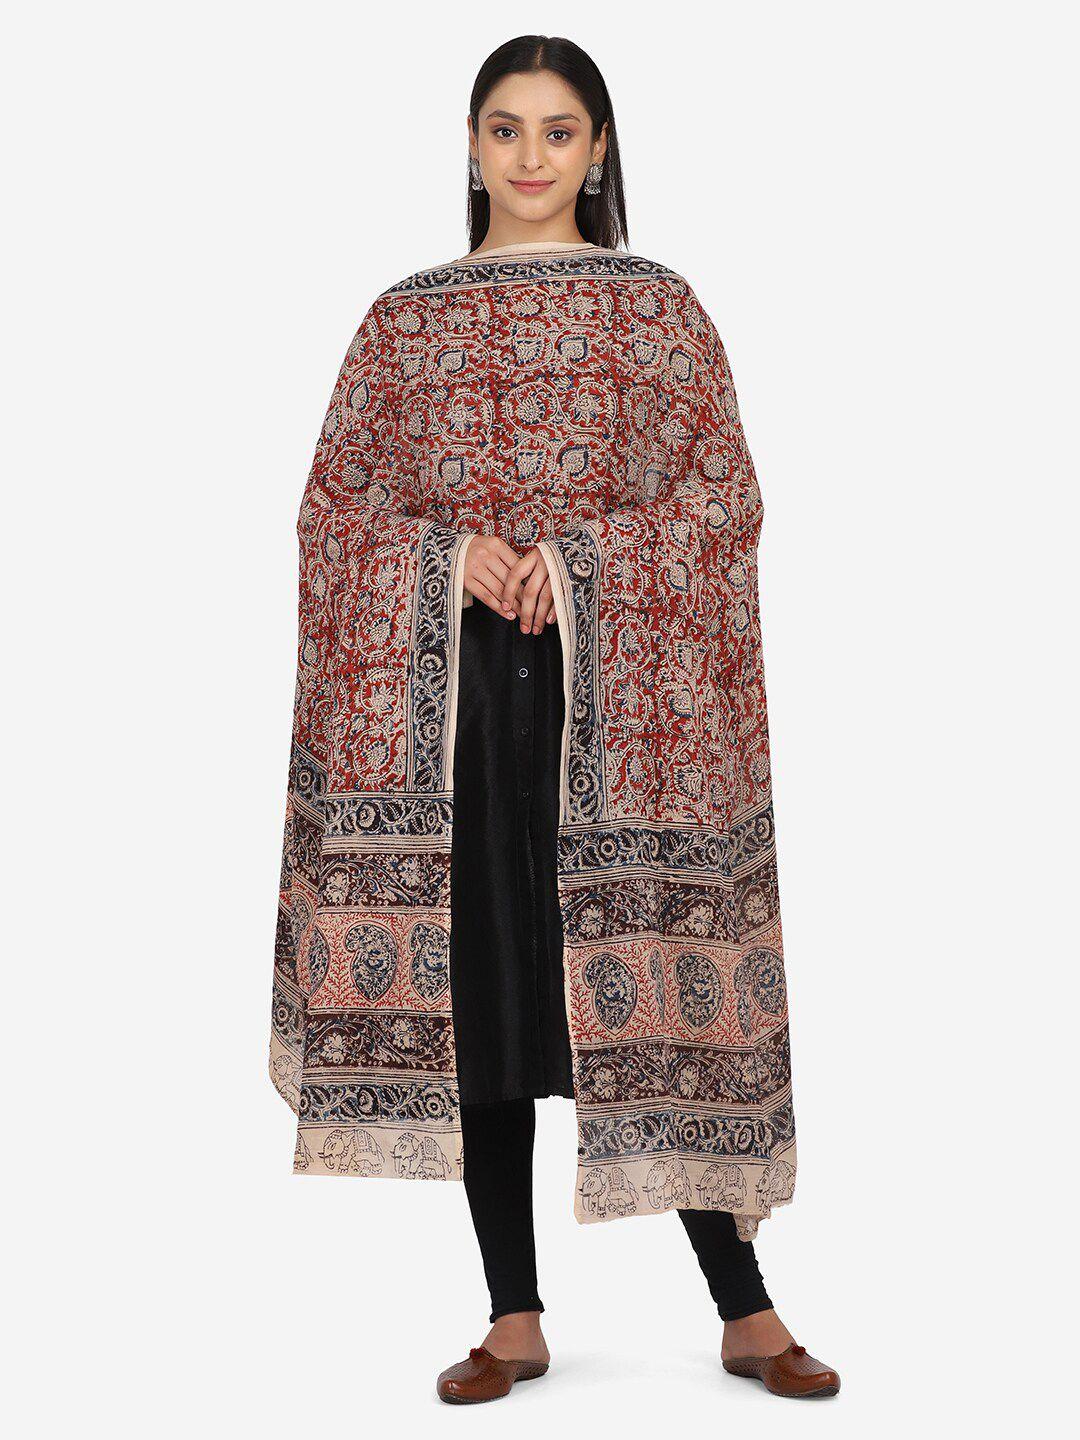 the-weave-traveller-red-&-grey-ethnic-motifs-printed-pure-cotton-kalamkari-dupatta